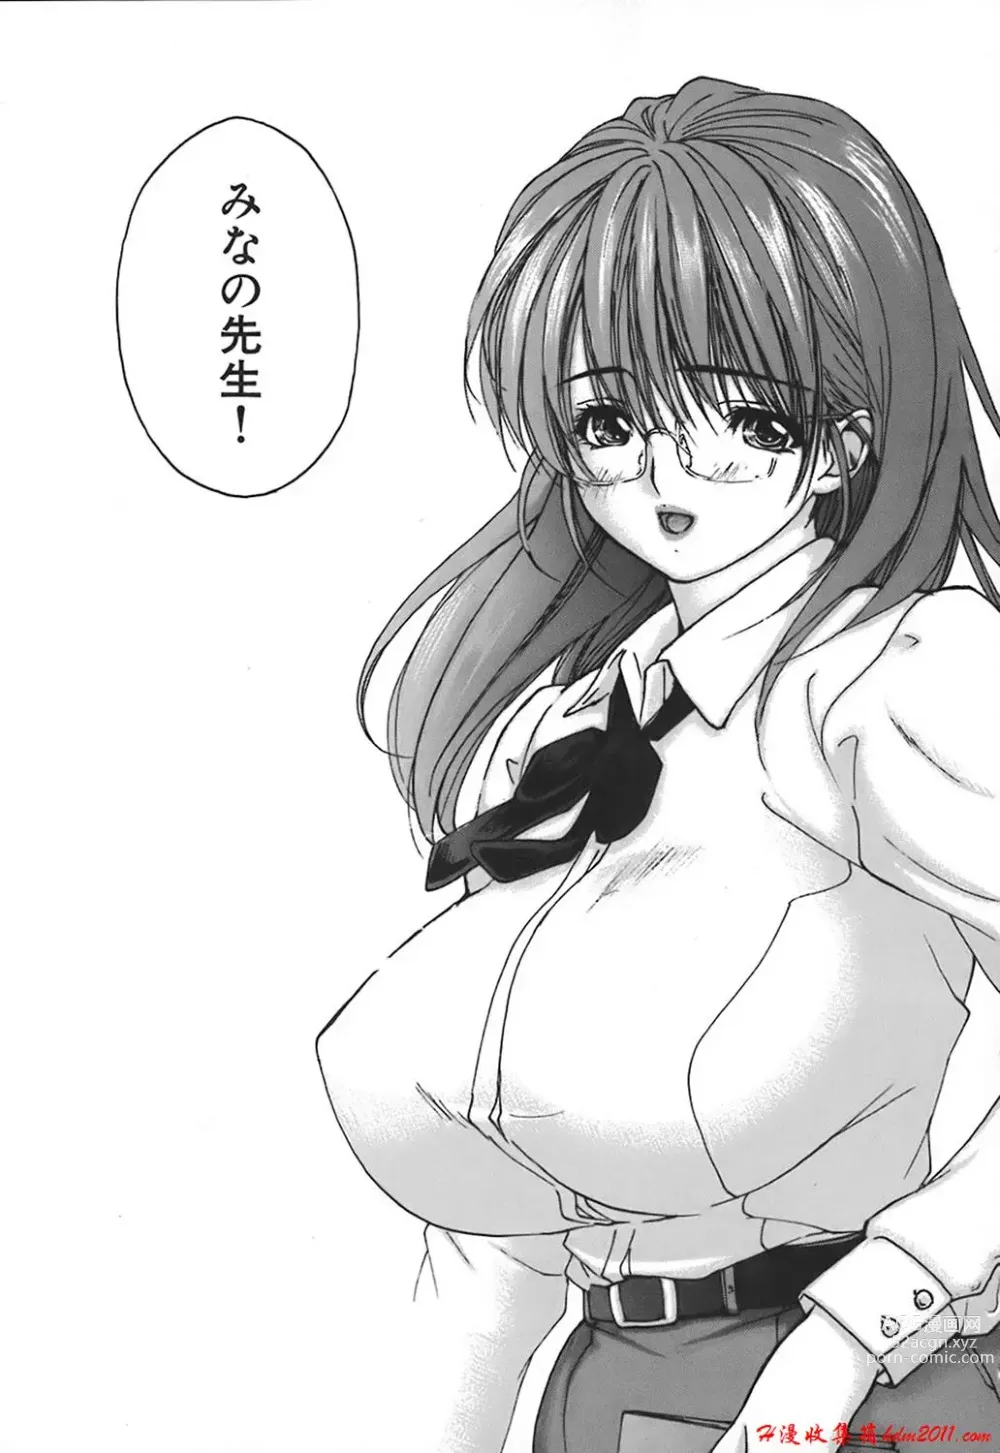 Page 850 of manga [MGジョー][Breastfeeding ~Hahachichi~] (Breastfeeding)